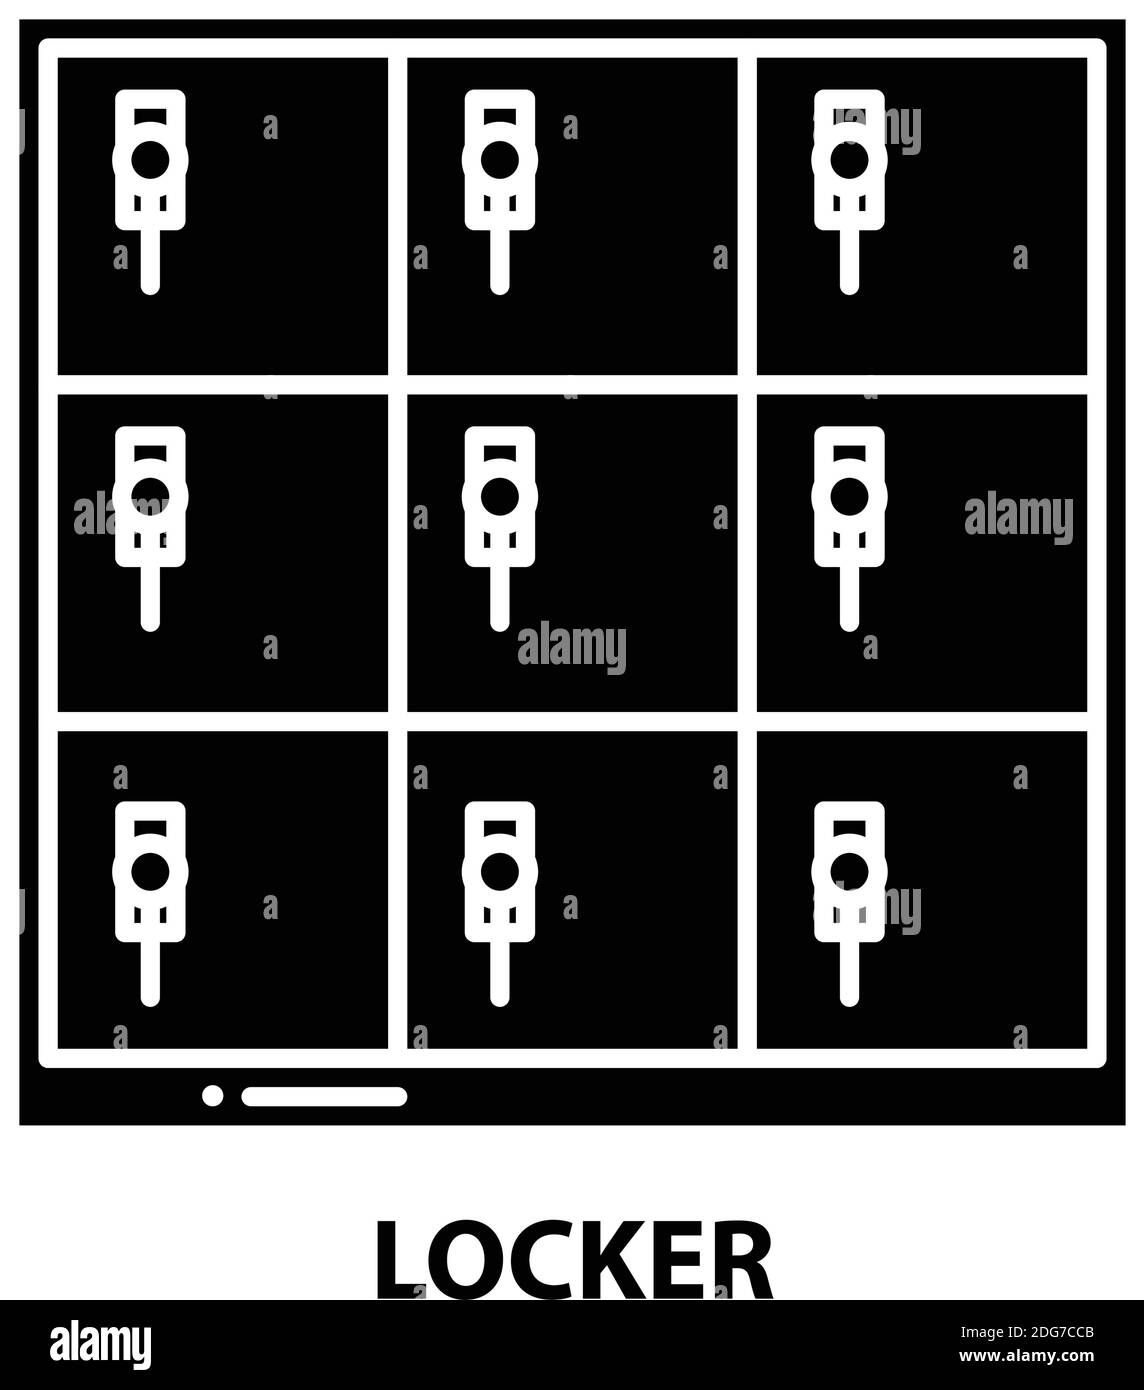 locker symbol icon, black vector sign with editable strokes, concept illustration Stock Vector